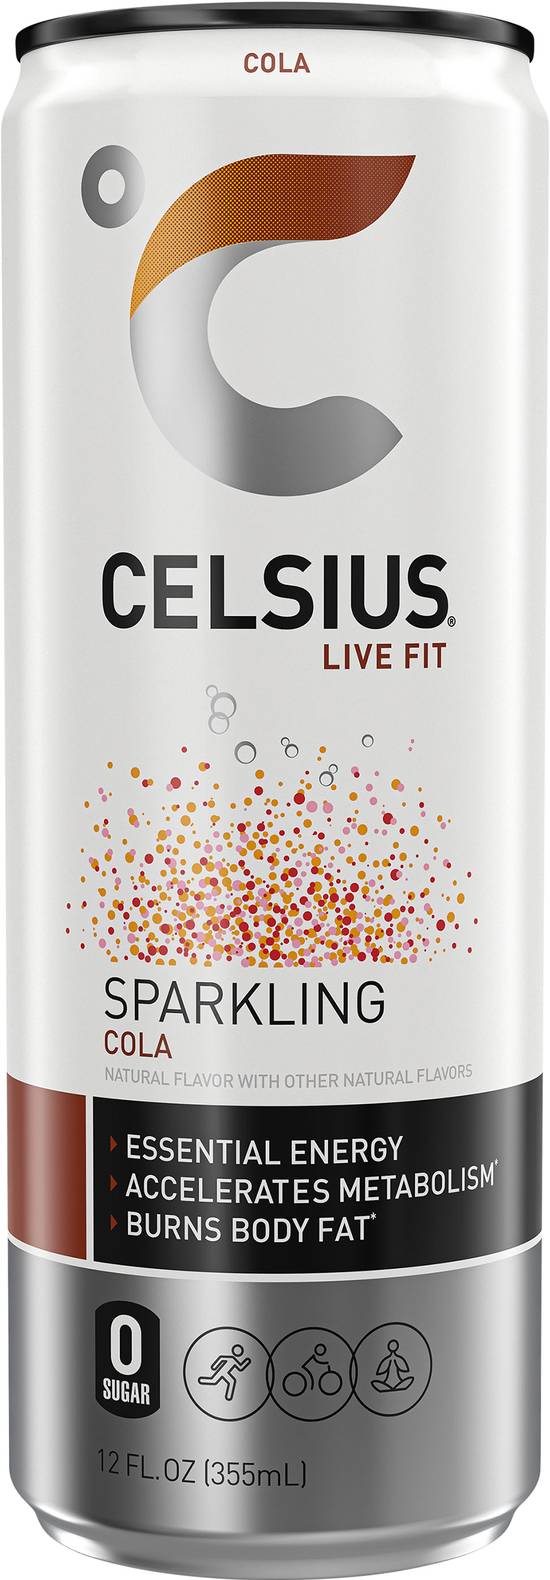 Celsius Live Fit No Sugar Sparkling Cola Energy Drink (12 fl oz)